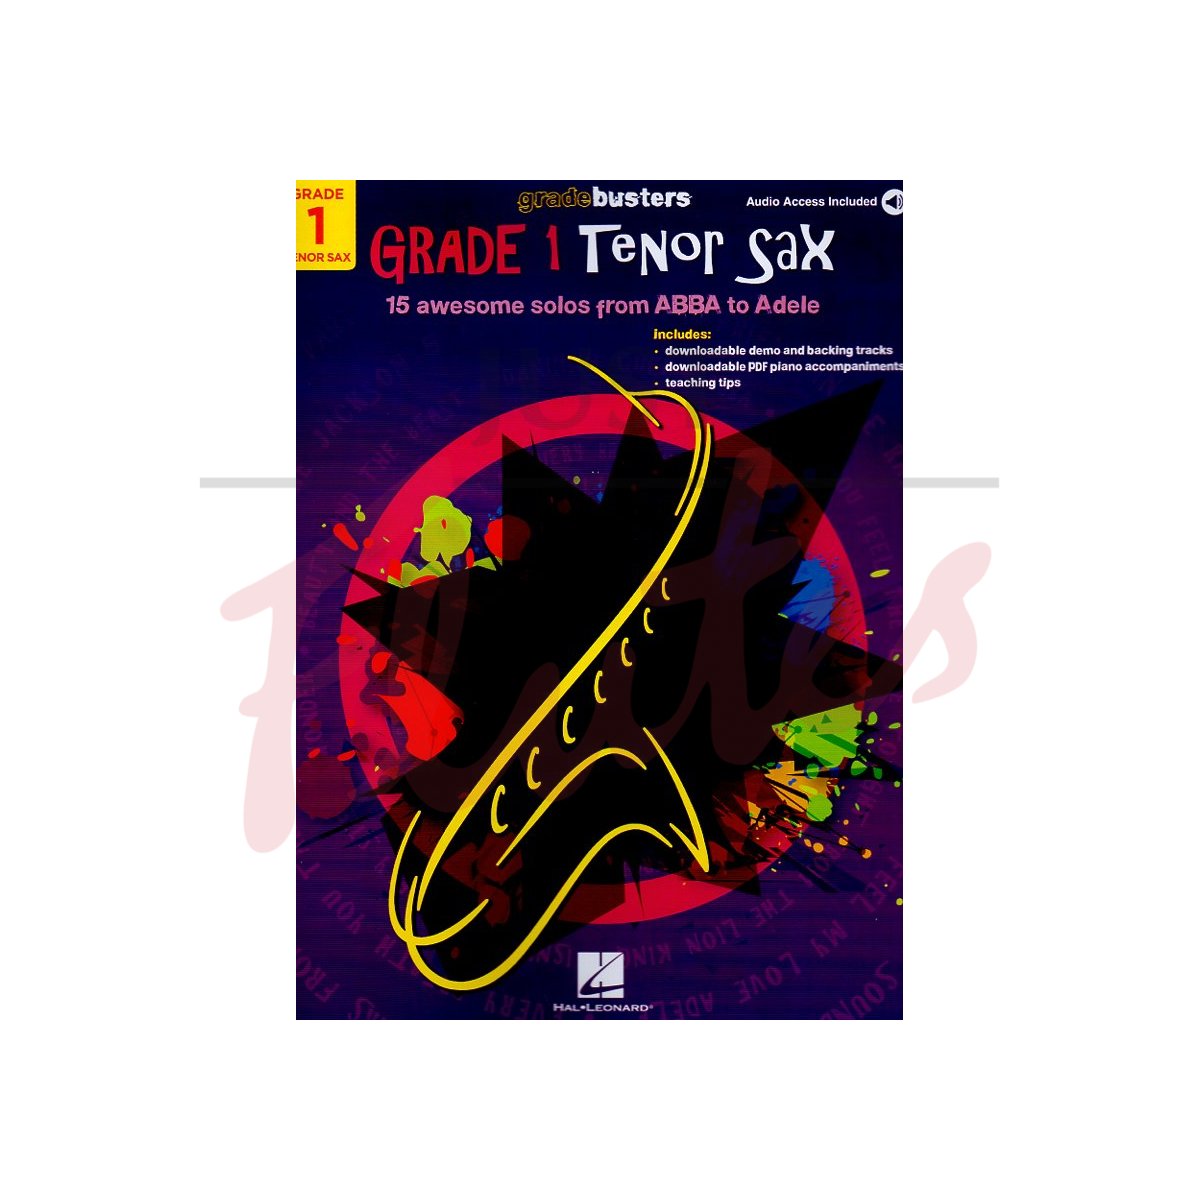 Gradebusters Grade 1 - Tenor Sax.